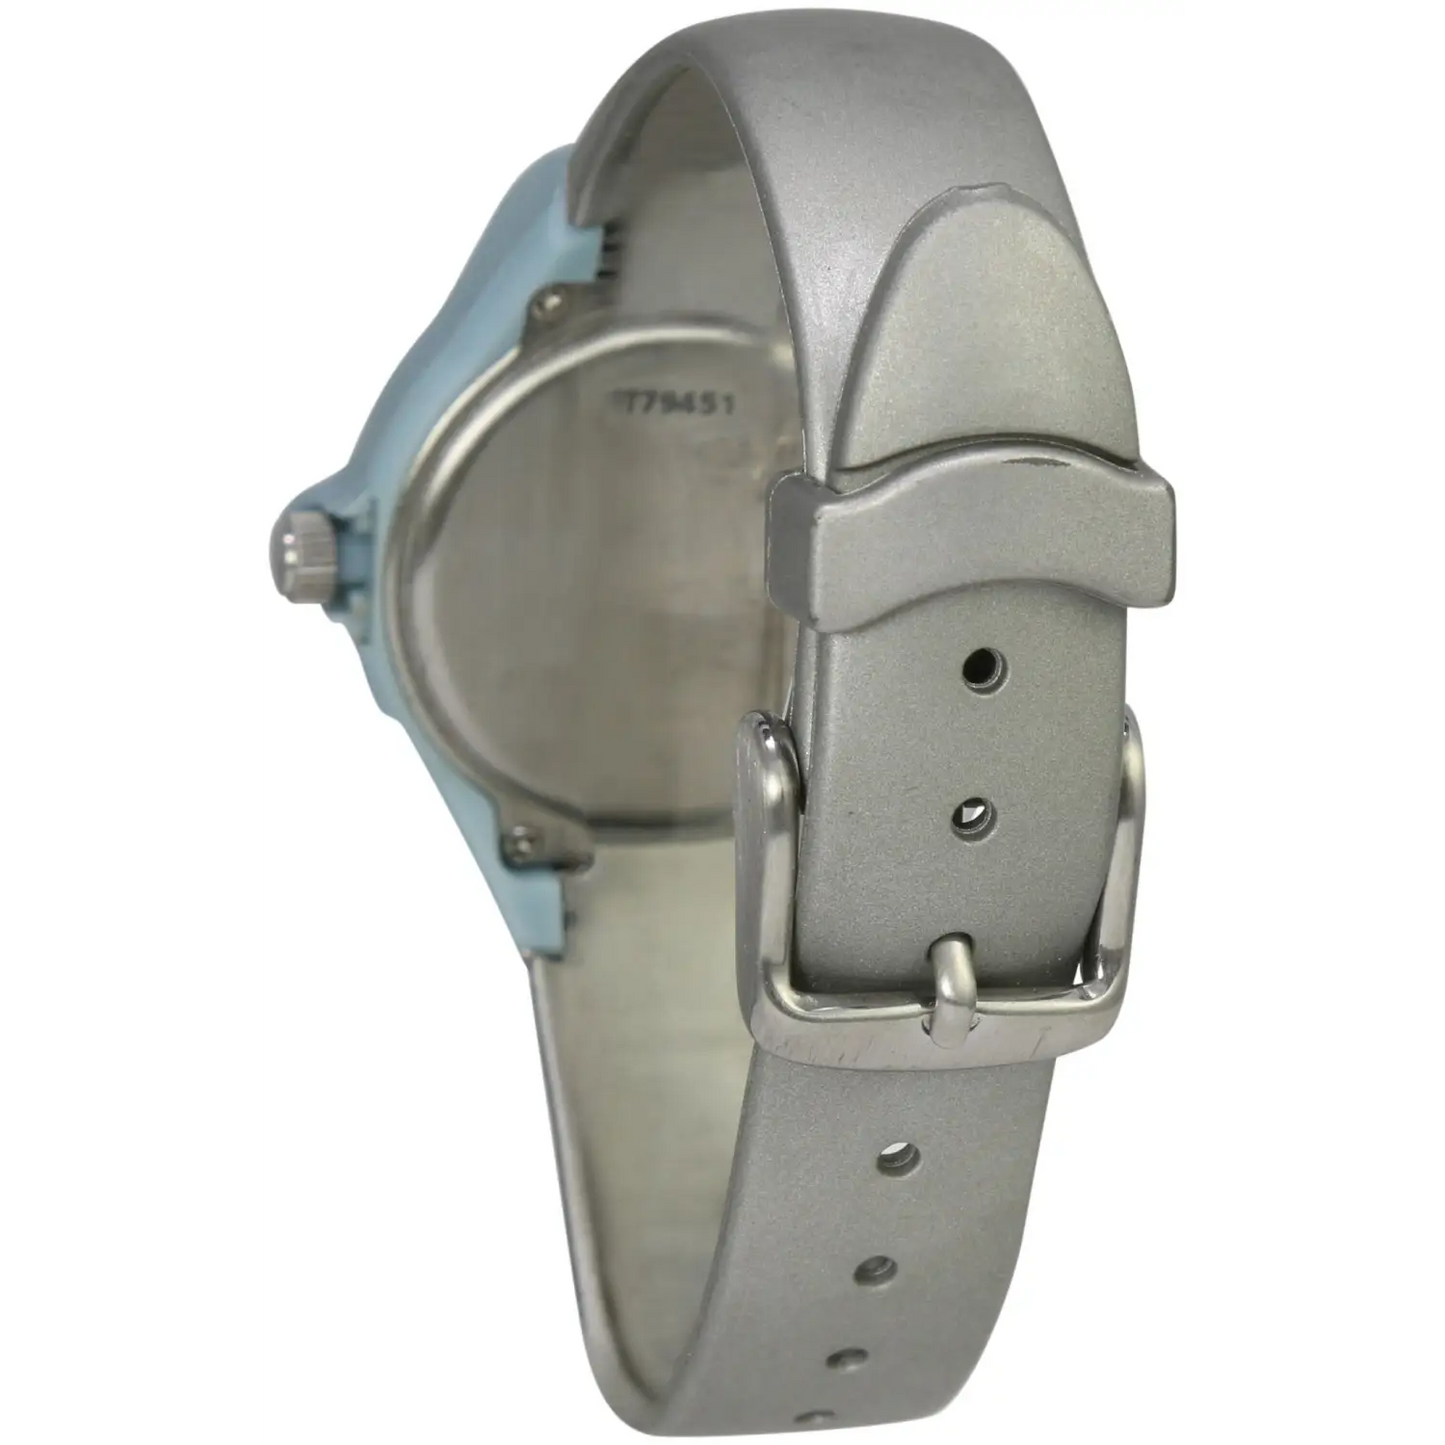 Timex Kids’ Analog Quartz Stainless Steel Grey Rubber Watch